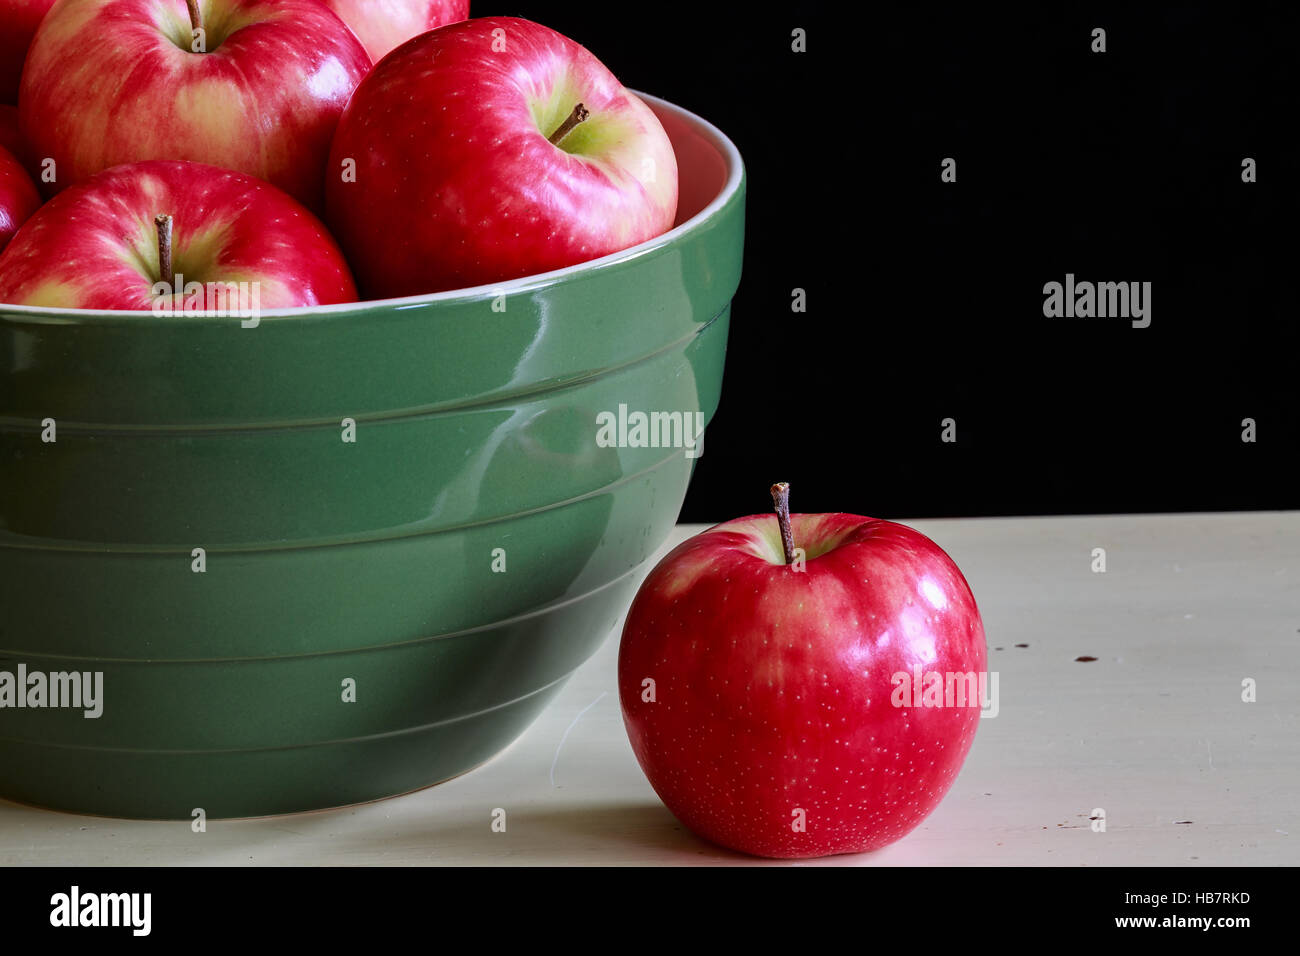 https://c8.alamy.com/comp/HB7RKD/a-bowl-of-fresh-ripe-honey-crisp-apples-HB7RKD.jpg